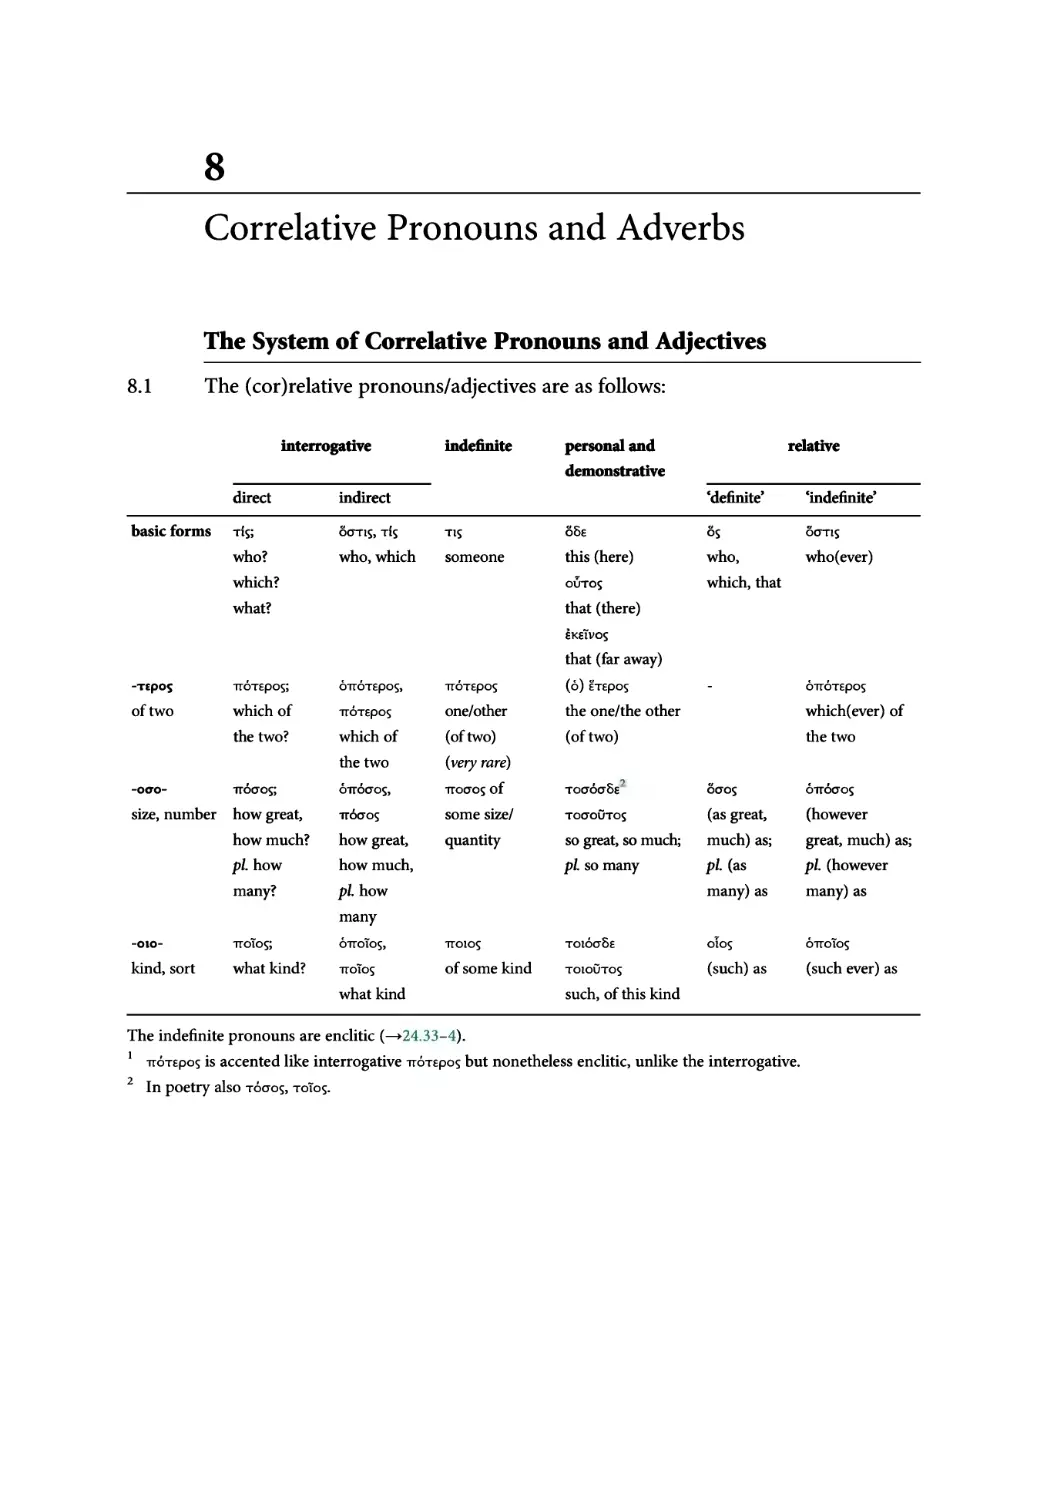 8. Correlative Pronouns and Adverbs